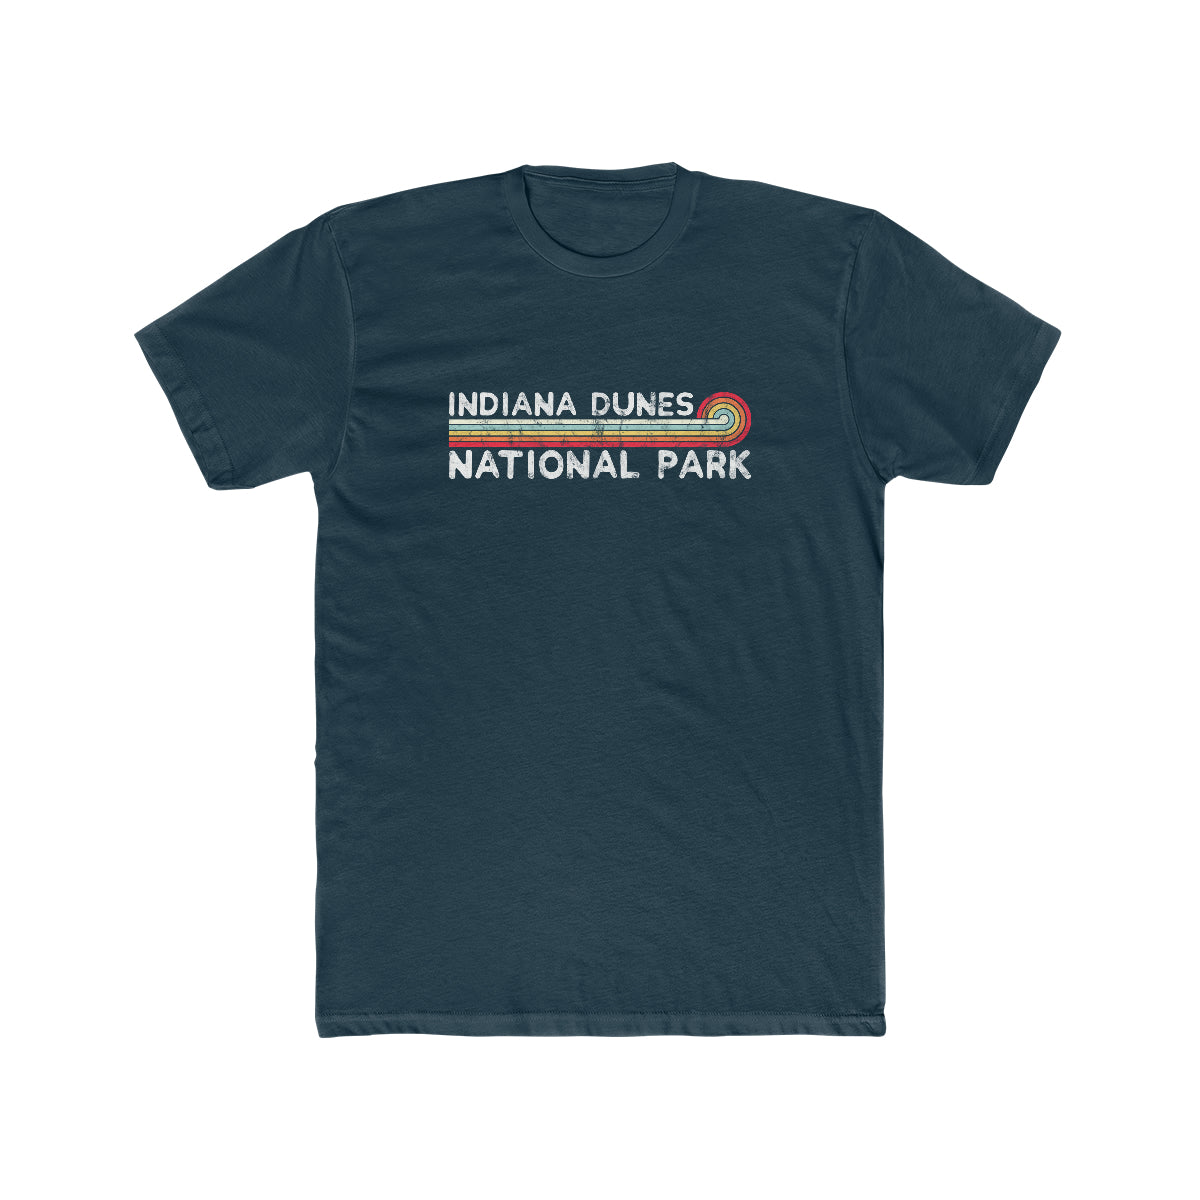 Indiana Dunes National Park T-Shirt - Vintage Stretched Sunrise